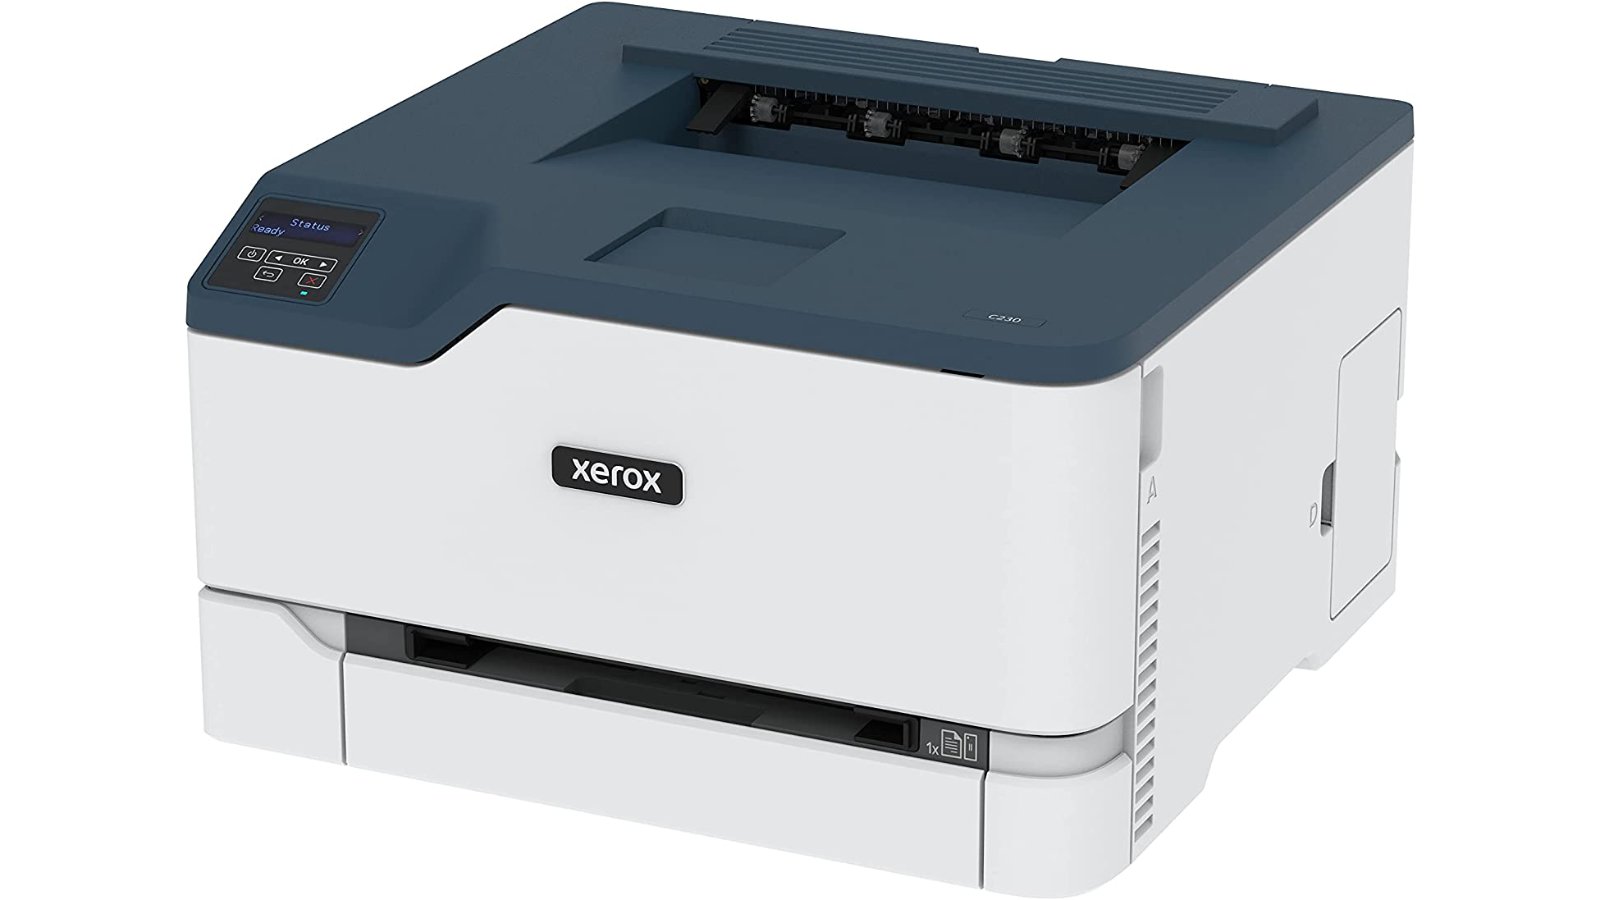 Imprimante laser couleur Xerox C230